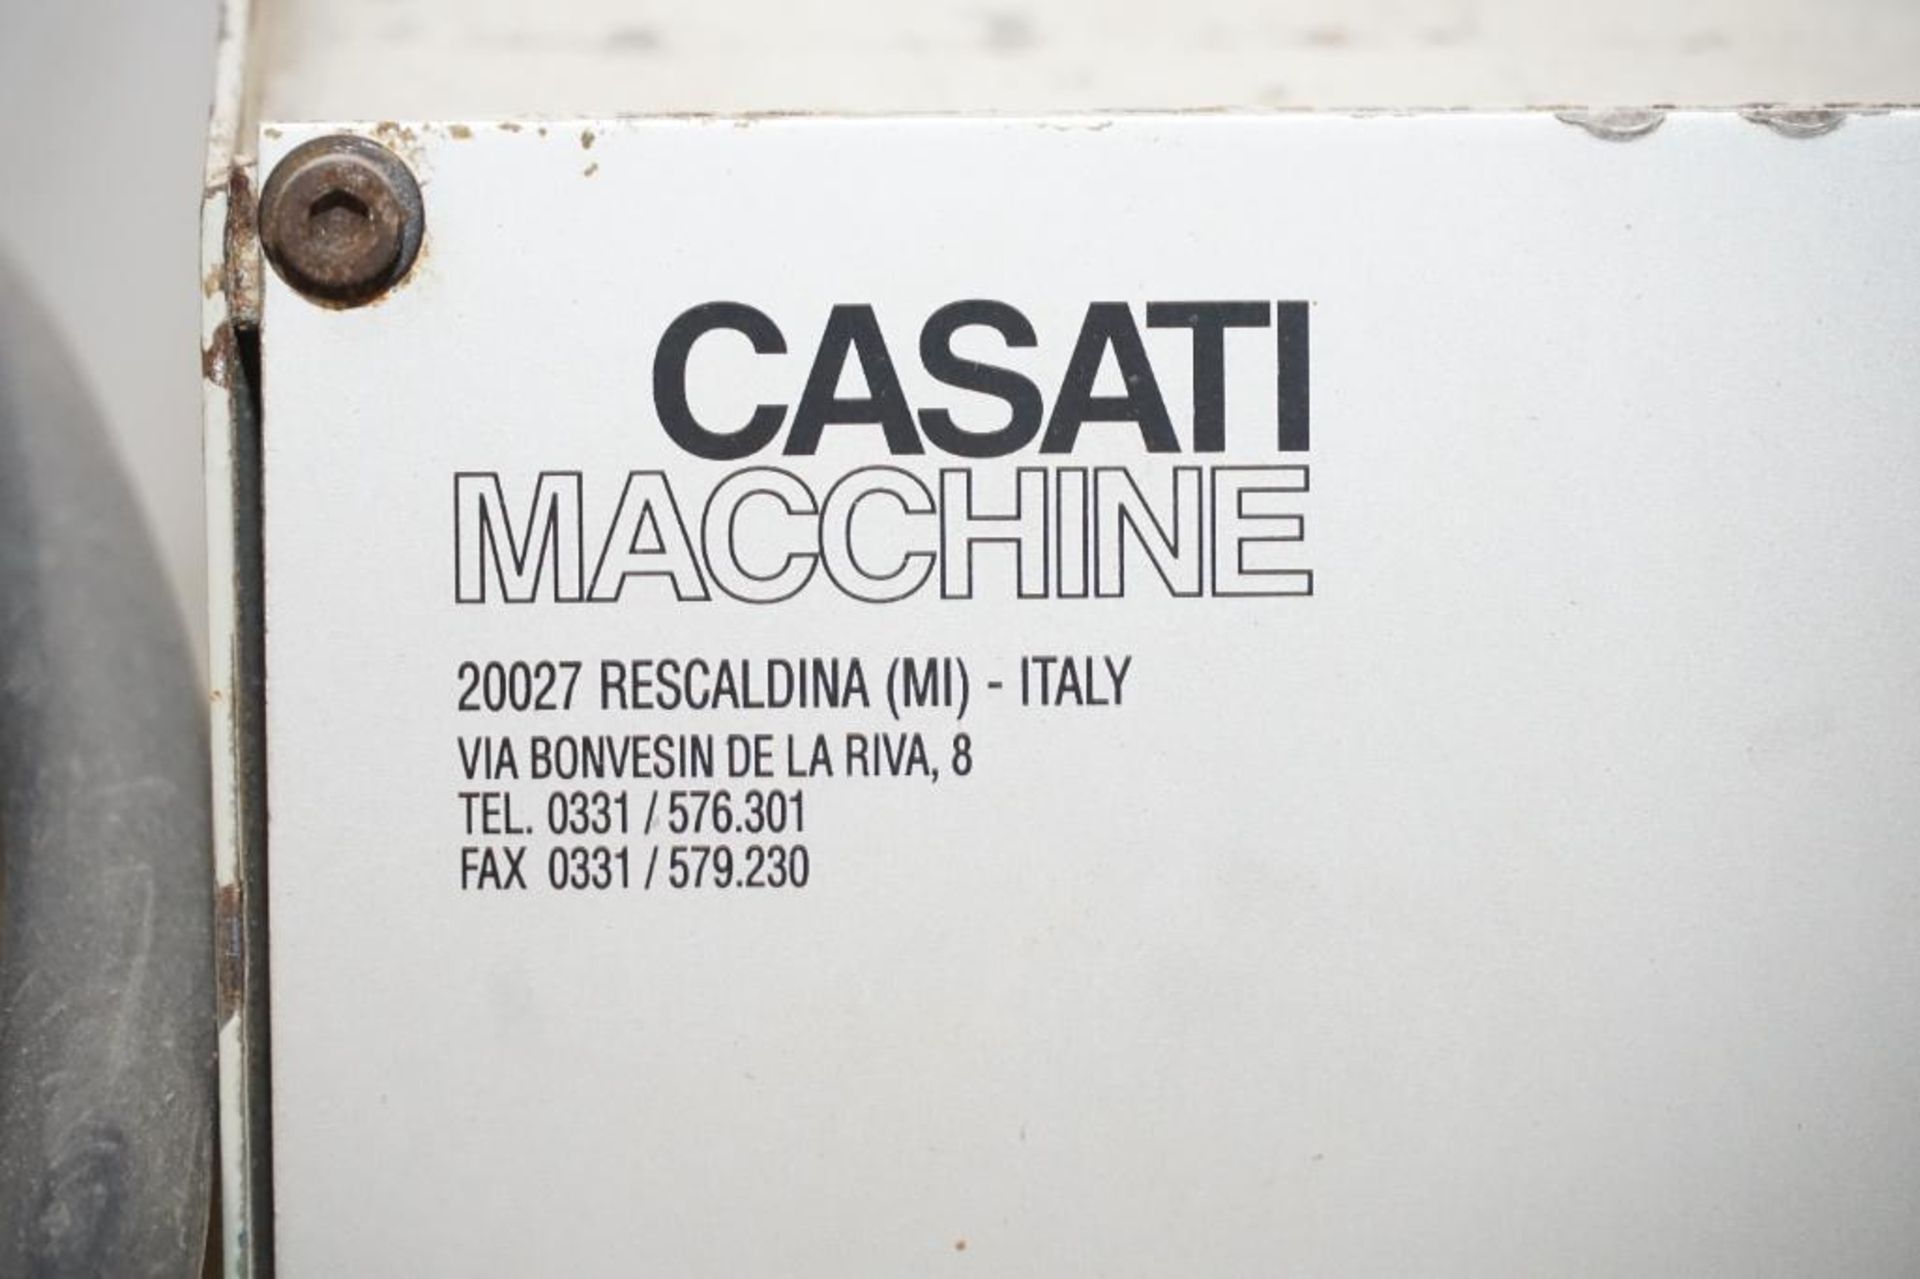 Casati Macchine - Image 8 of 8